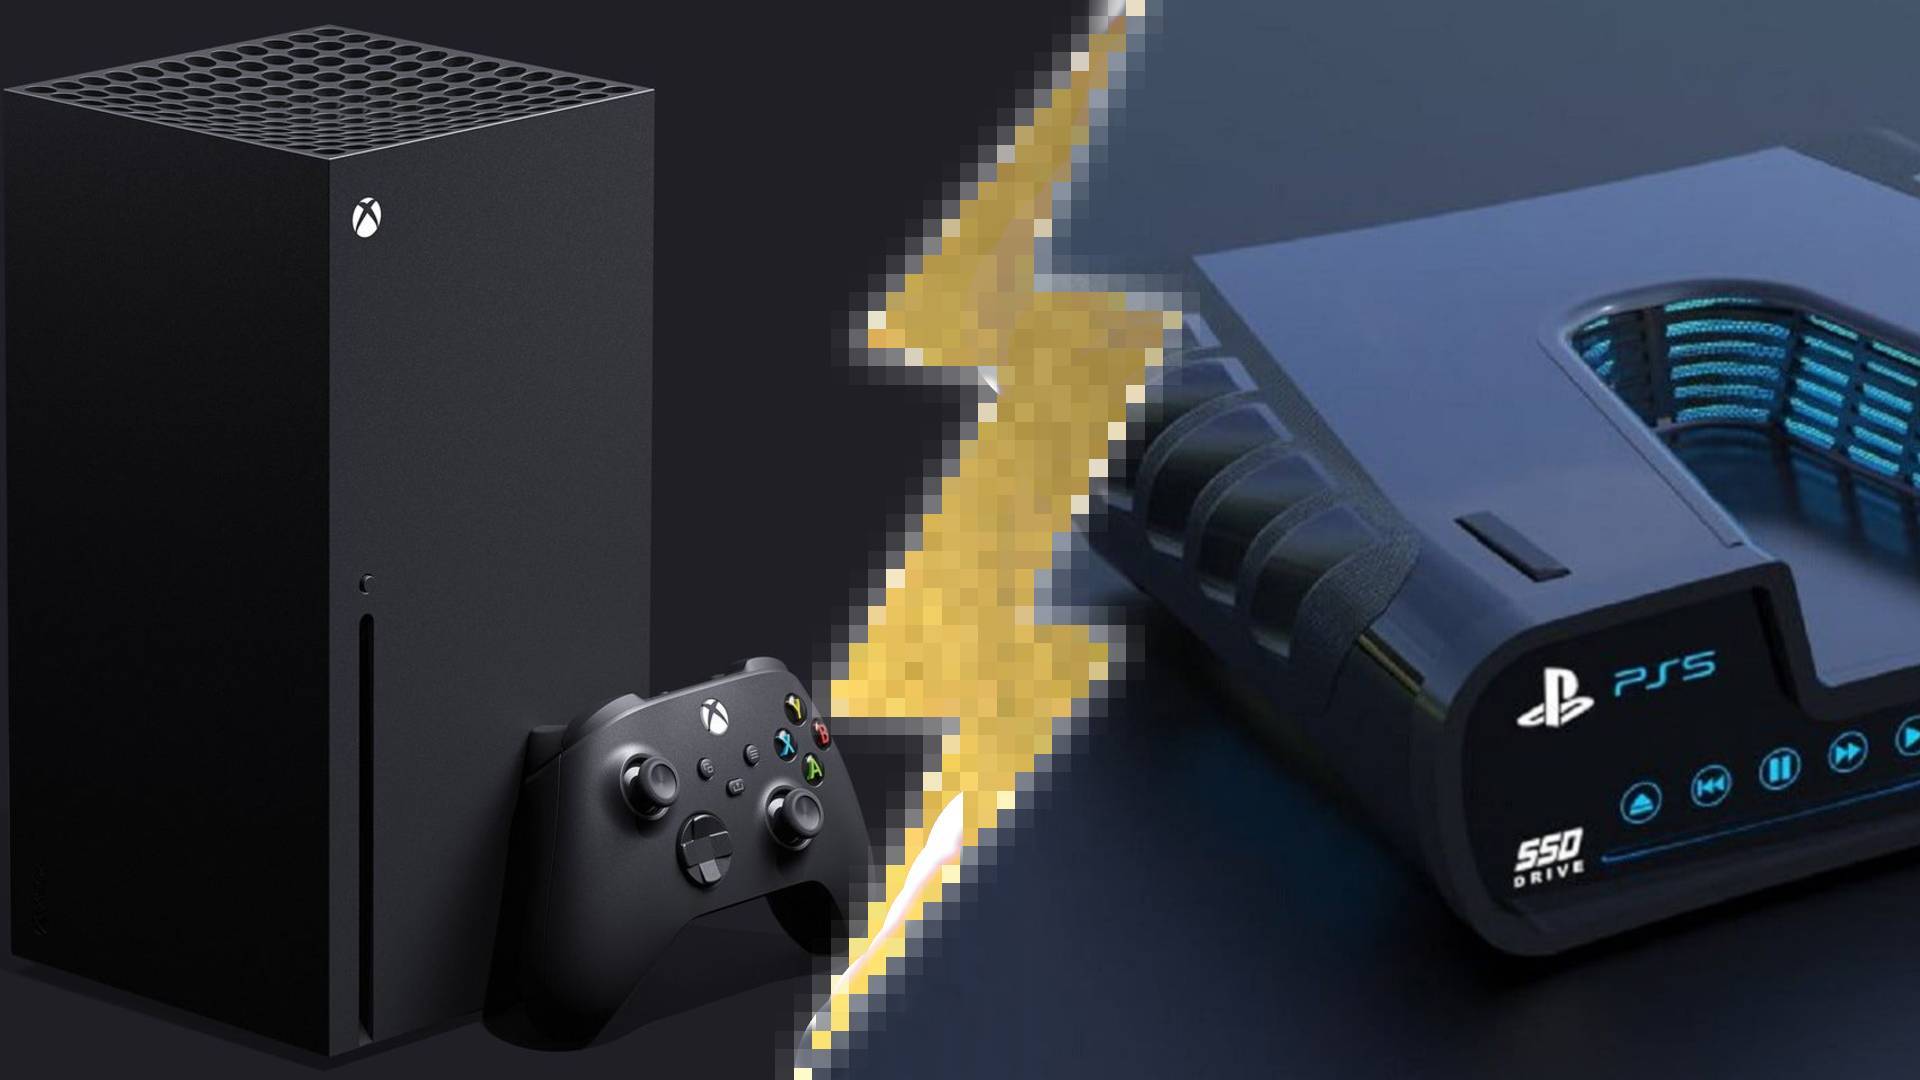 grund Seaside faldskærm PS5 vs Xbox Series X - We compare specs